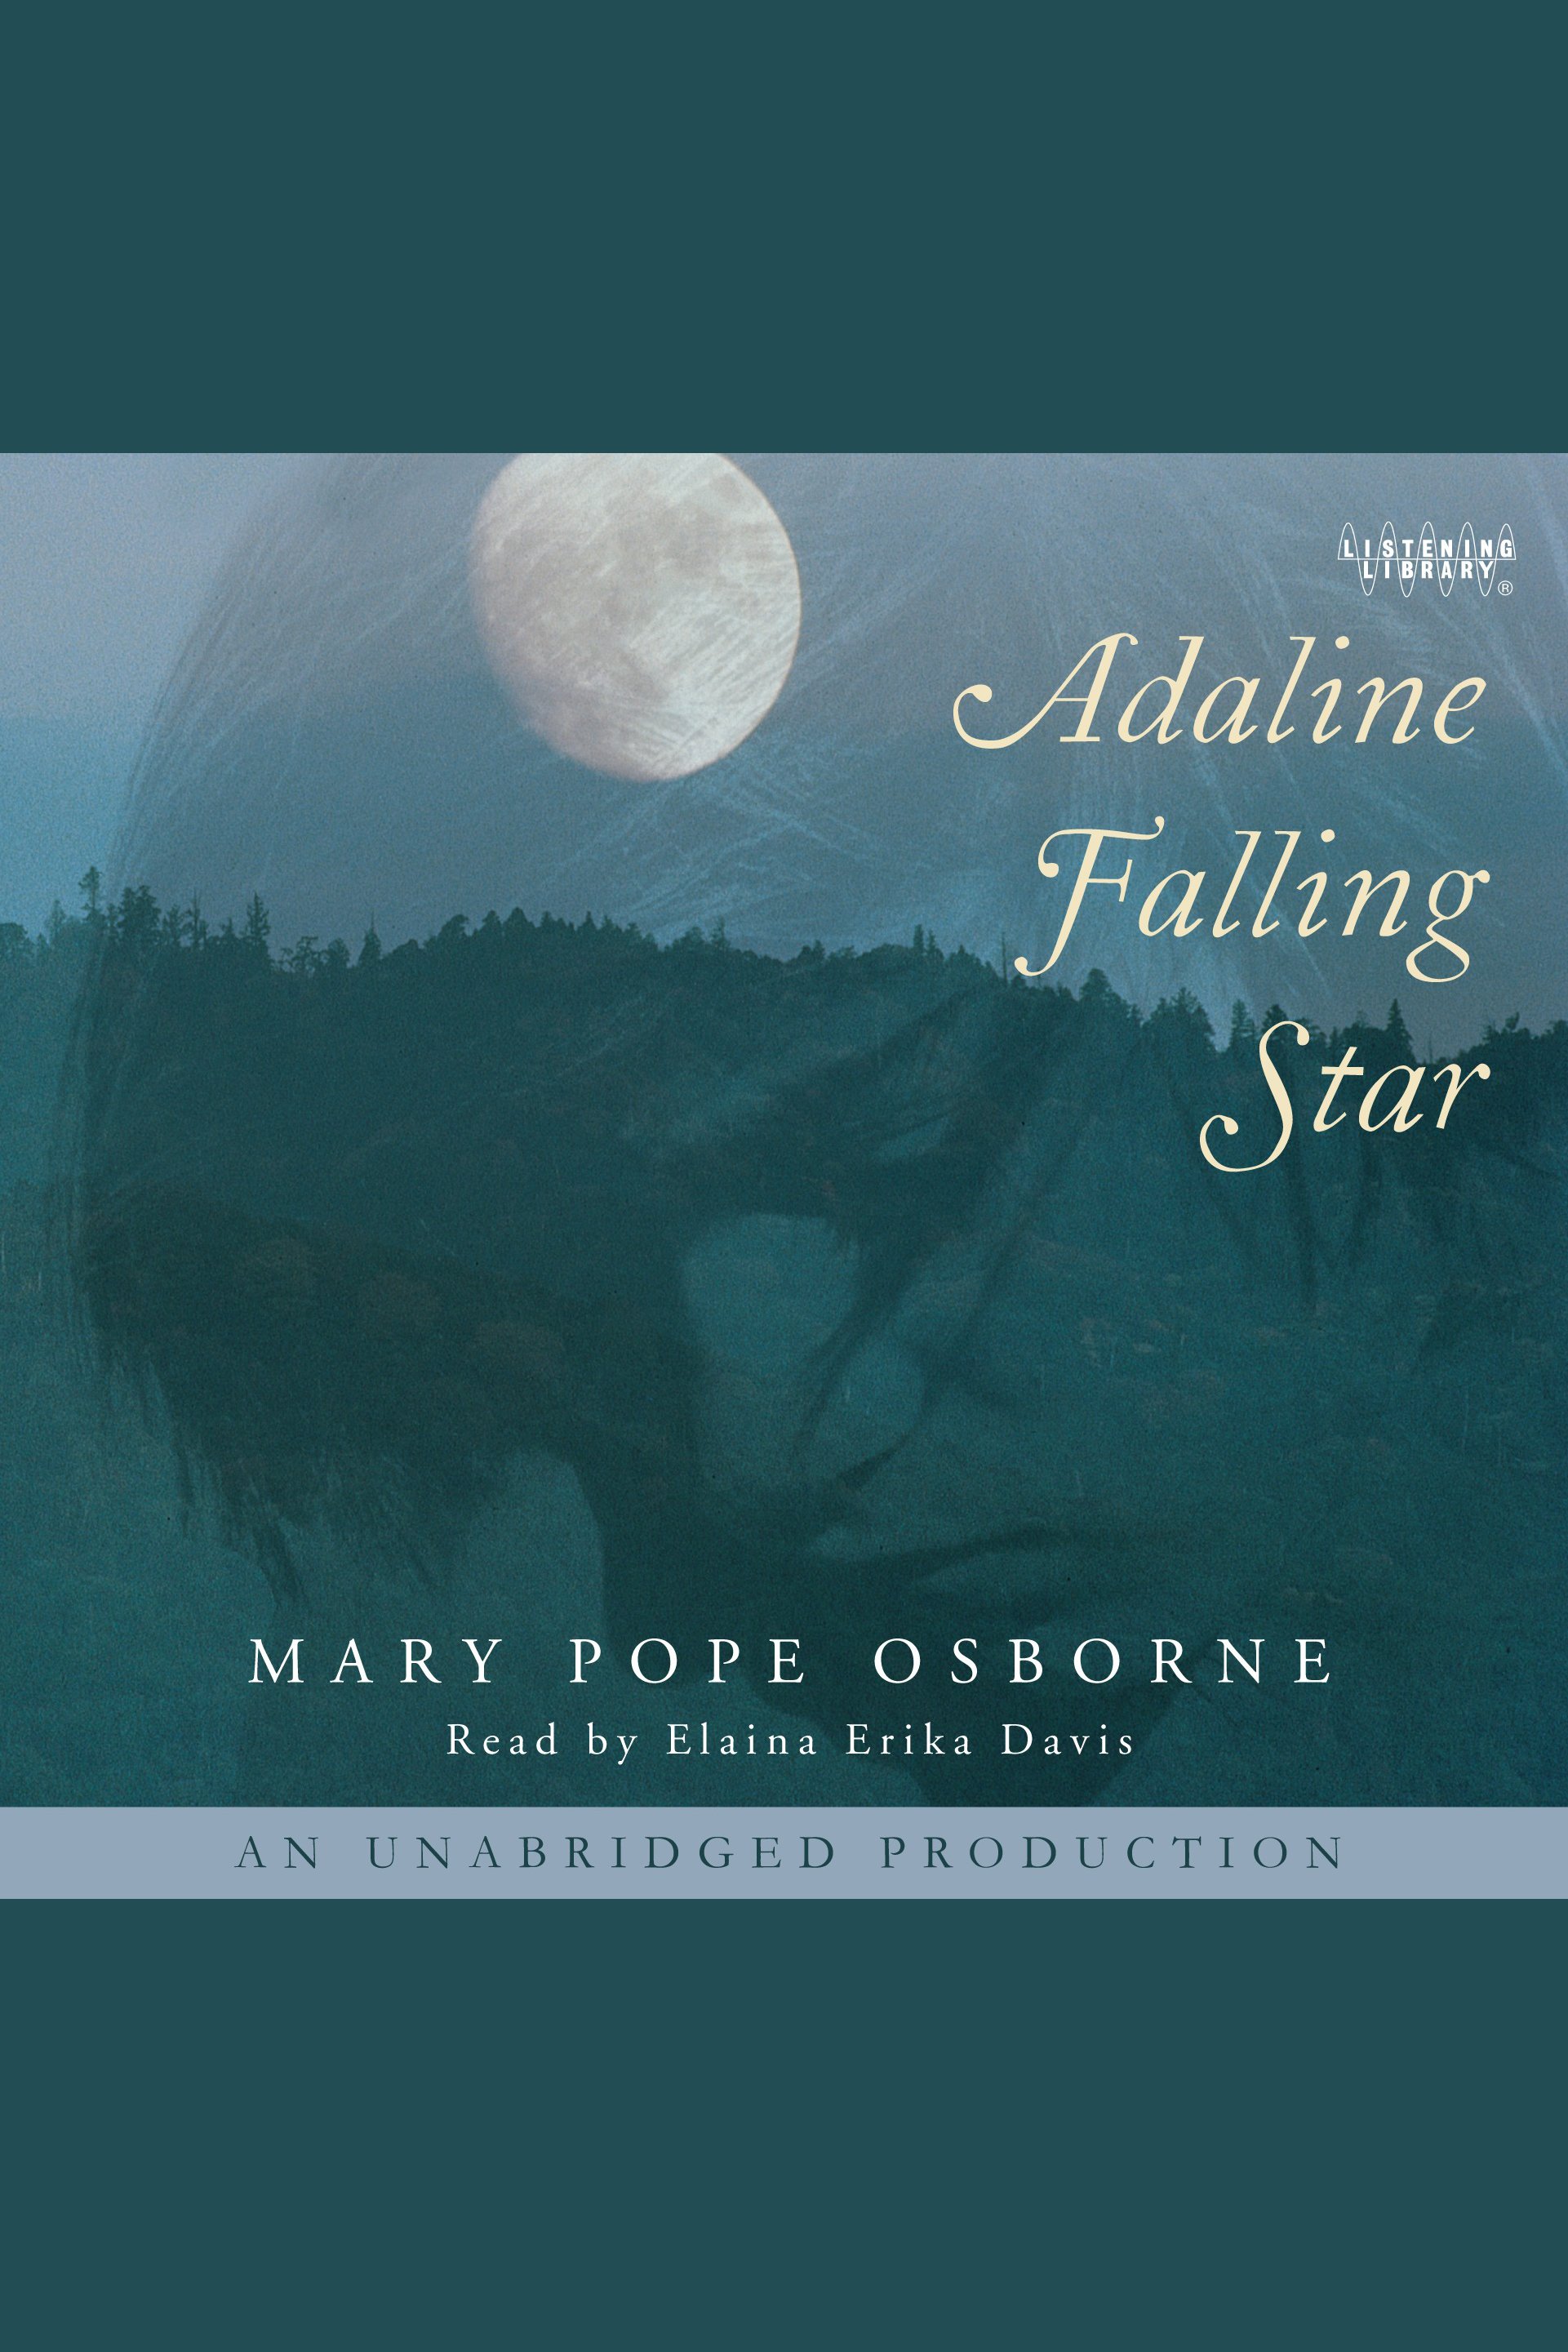 Adaline falling star cover image